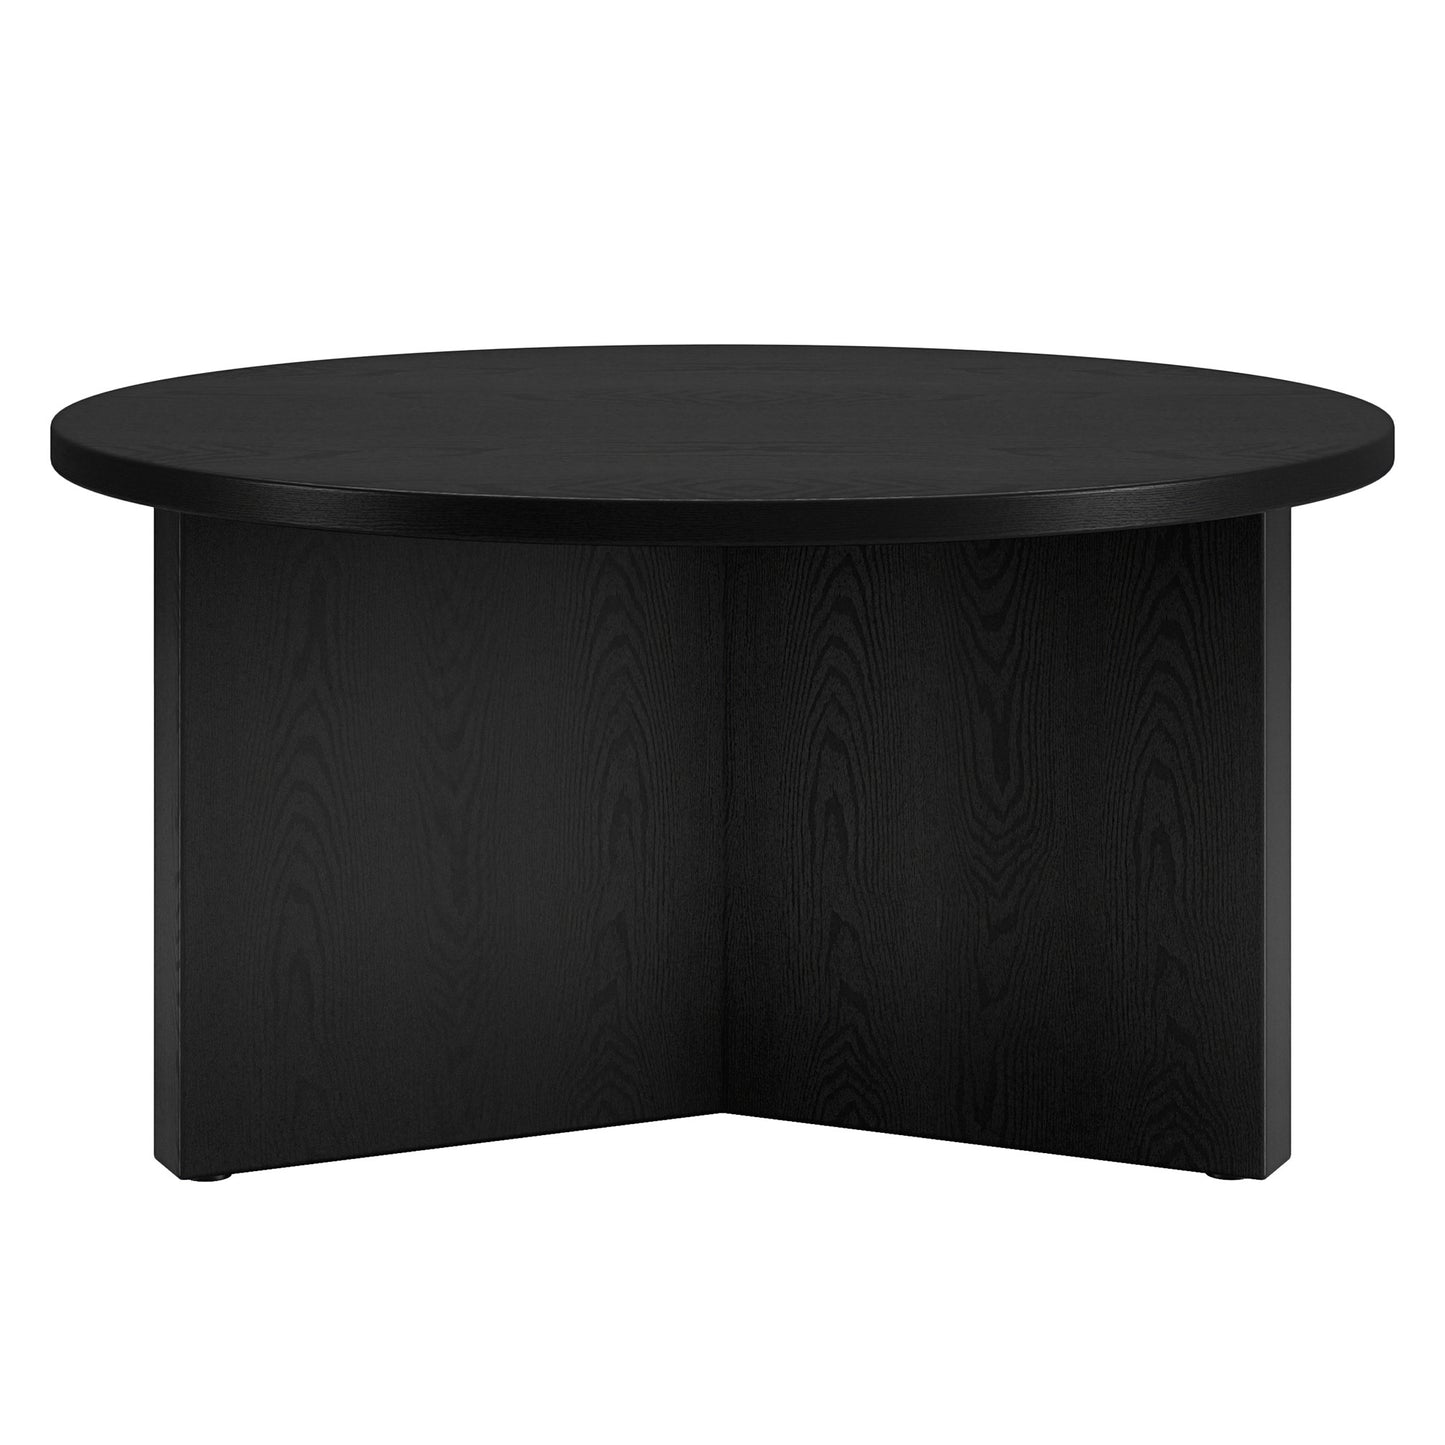 32" Black Round Coffee Table